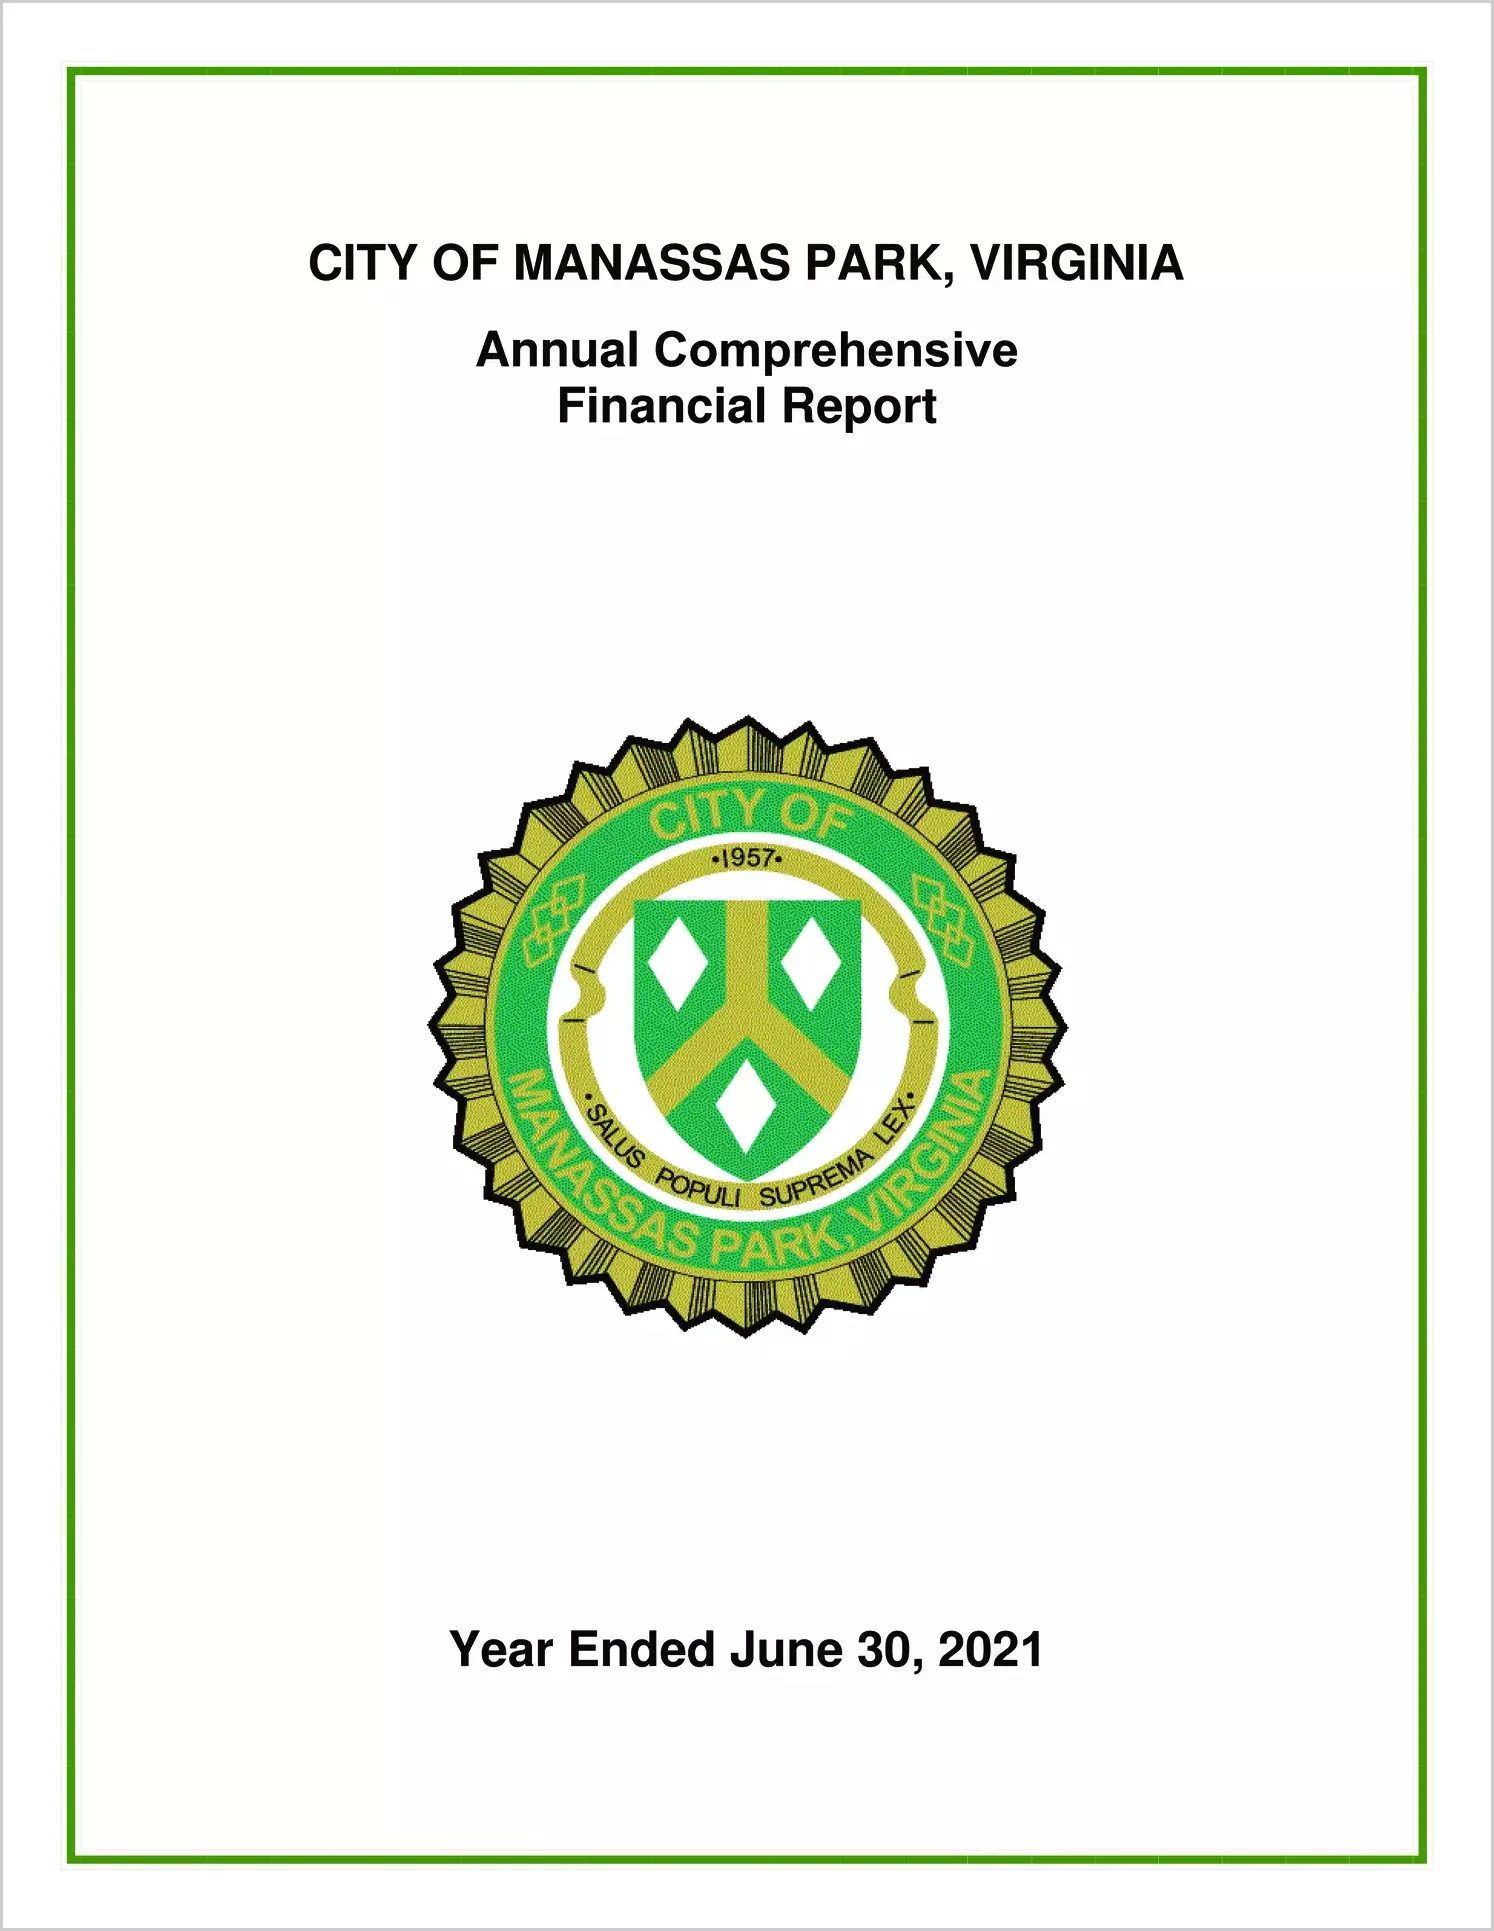 2021 Annual Financial Report for City of Manassas Park